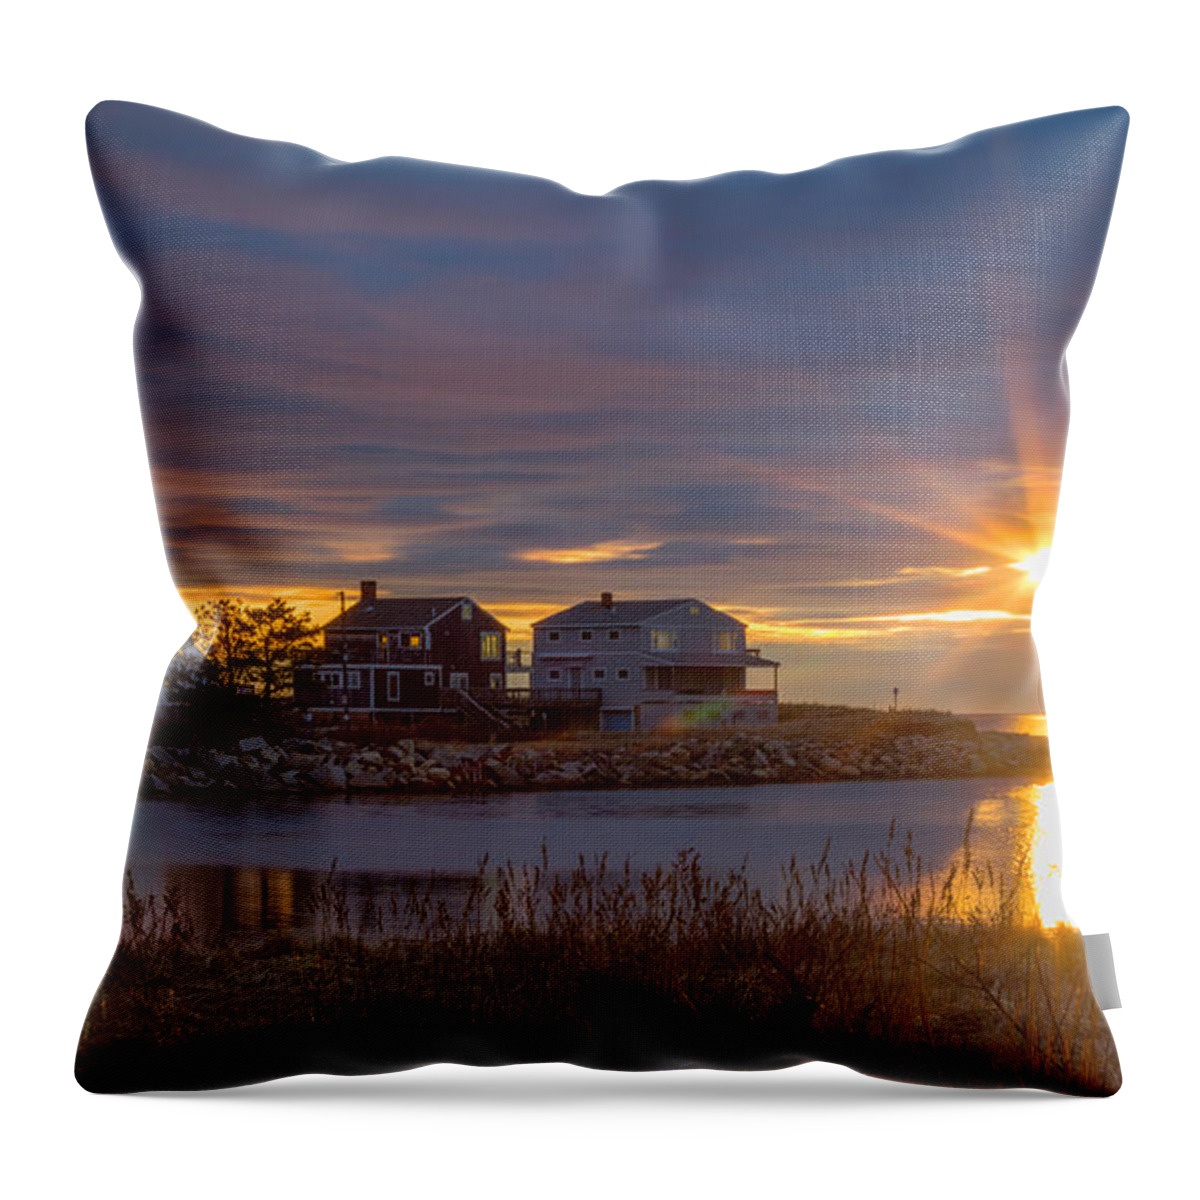 Goosefare Brook Throw Pillow featuring the photograph Goosefare Brook Sunrise - Saco Maine by Kirkodd Photography Of New England